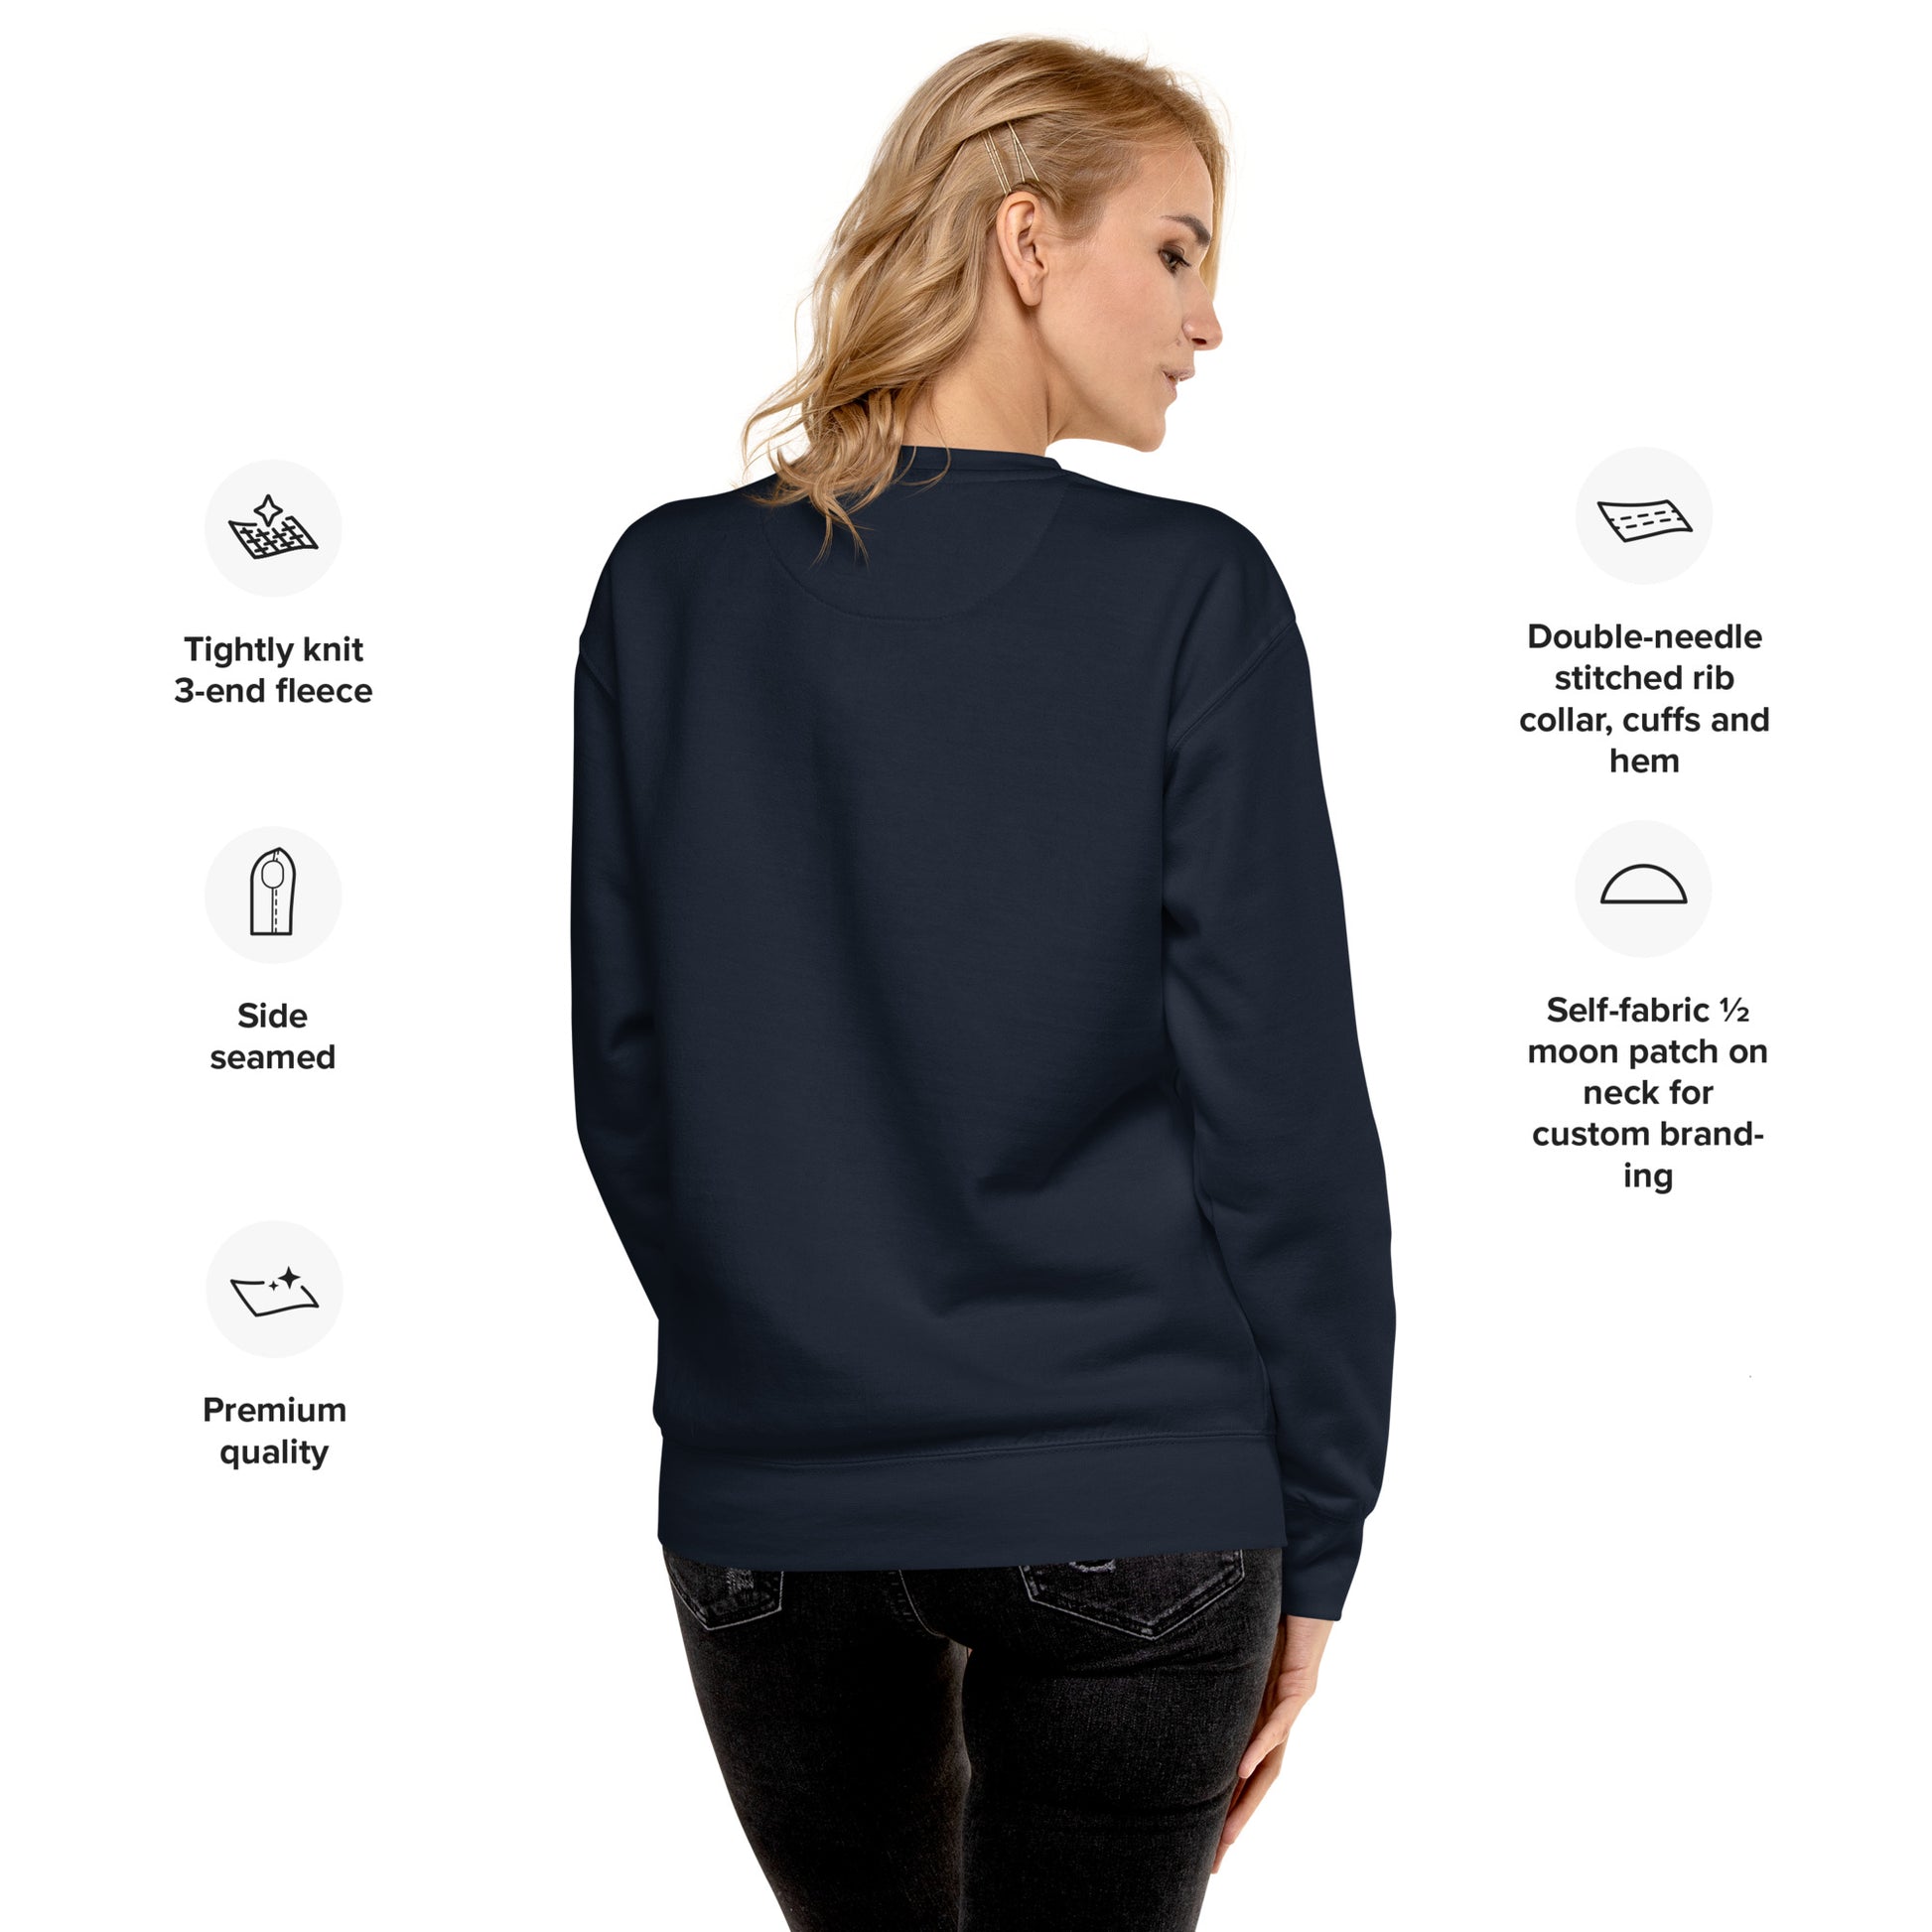 Navy Blazer Women's Premium Cotton Sweatshirt by Women's Premium Cotton Sweatshirt sold by Jain Yoga